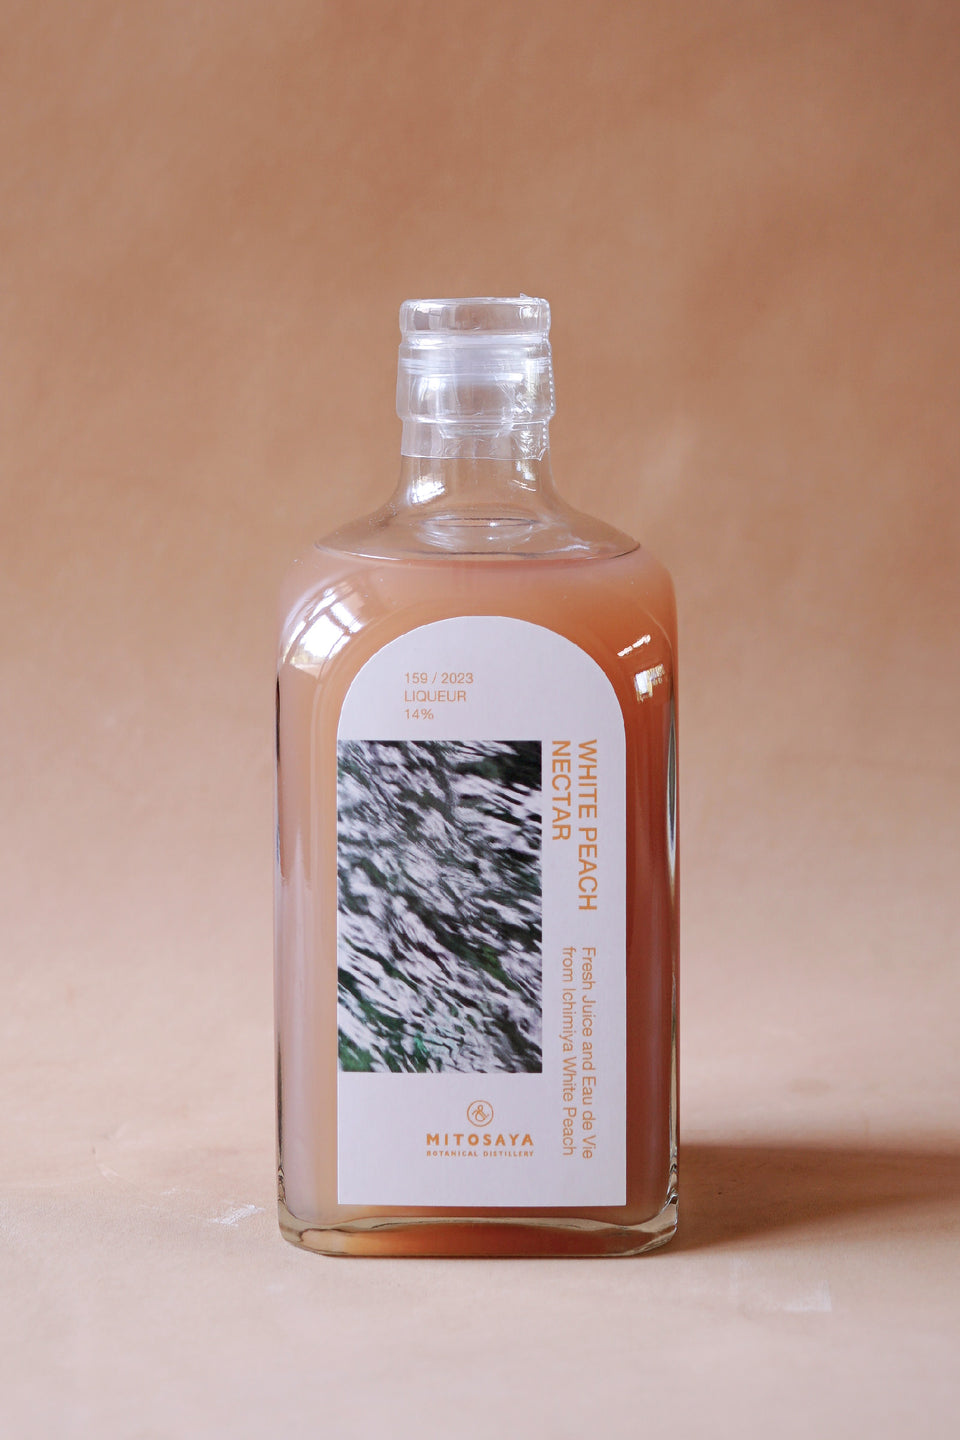 LIQUEUR – mitosaya botanical distillery